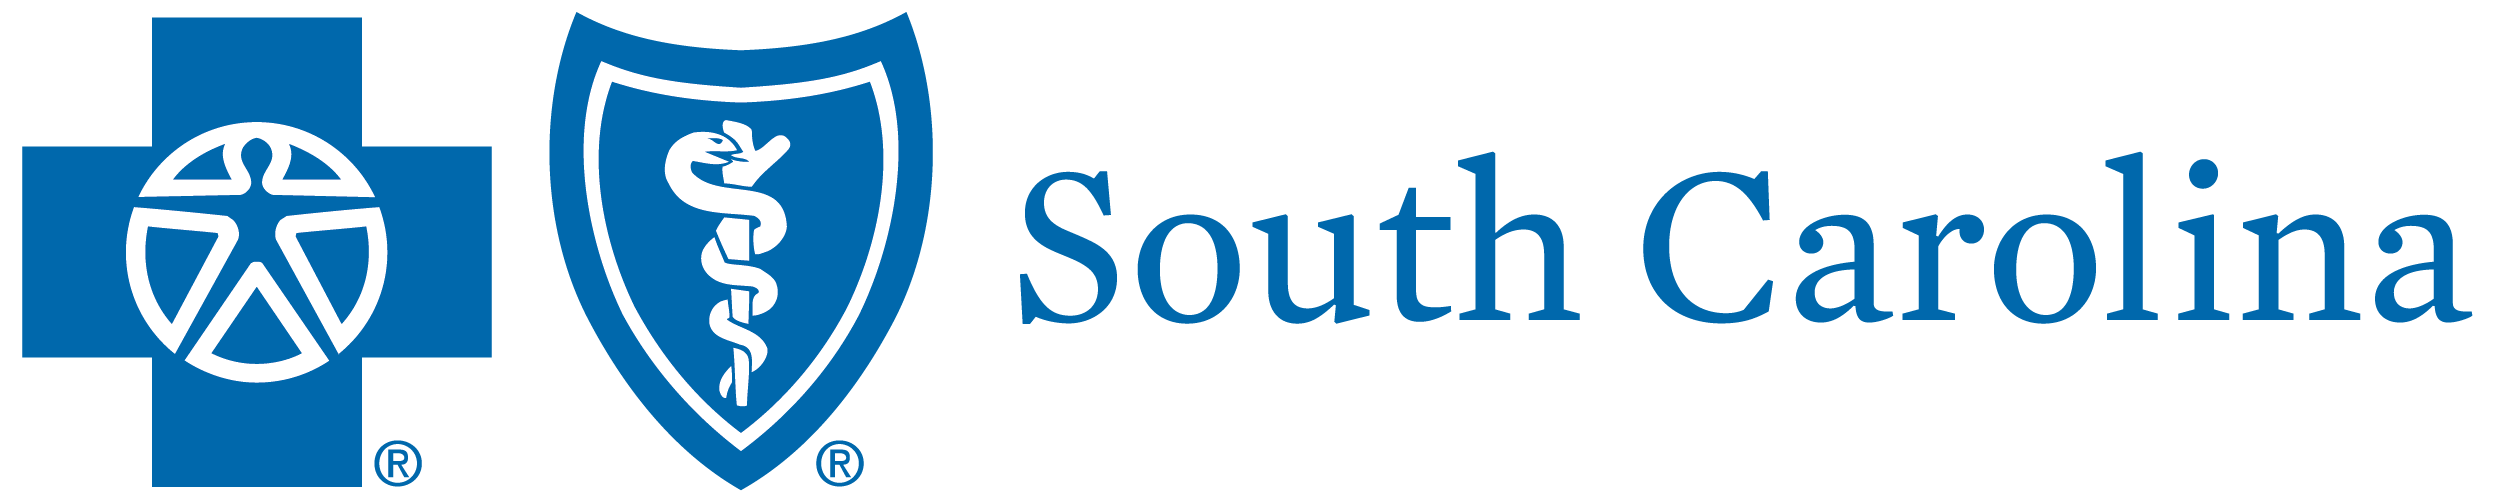 BlueCross BlueShield of SC logo